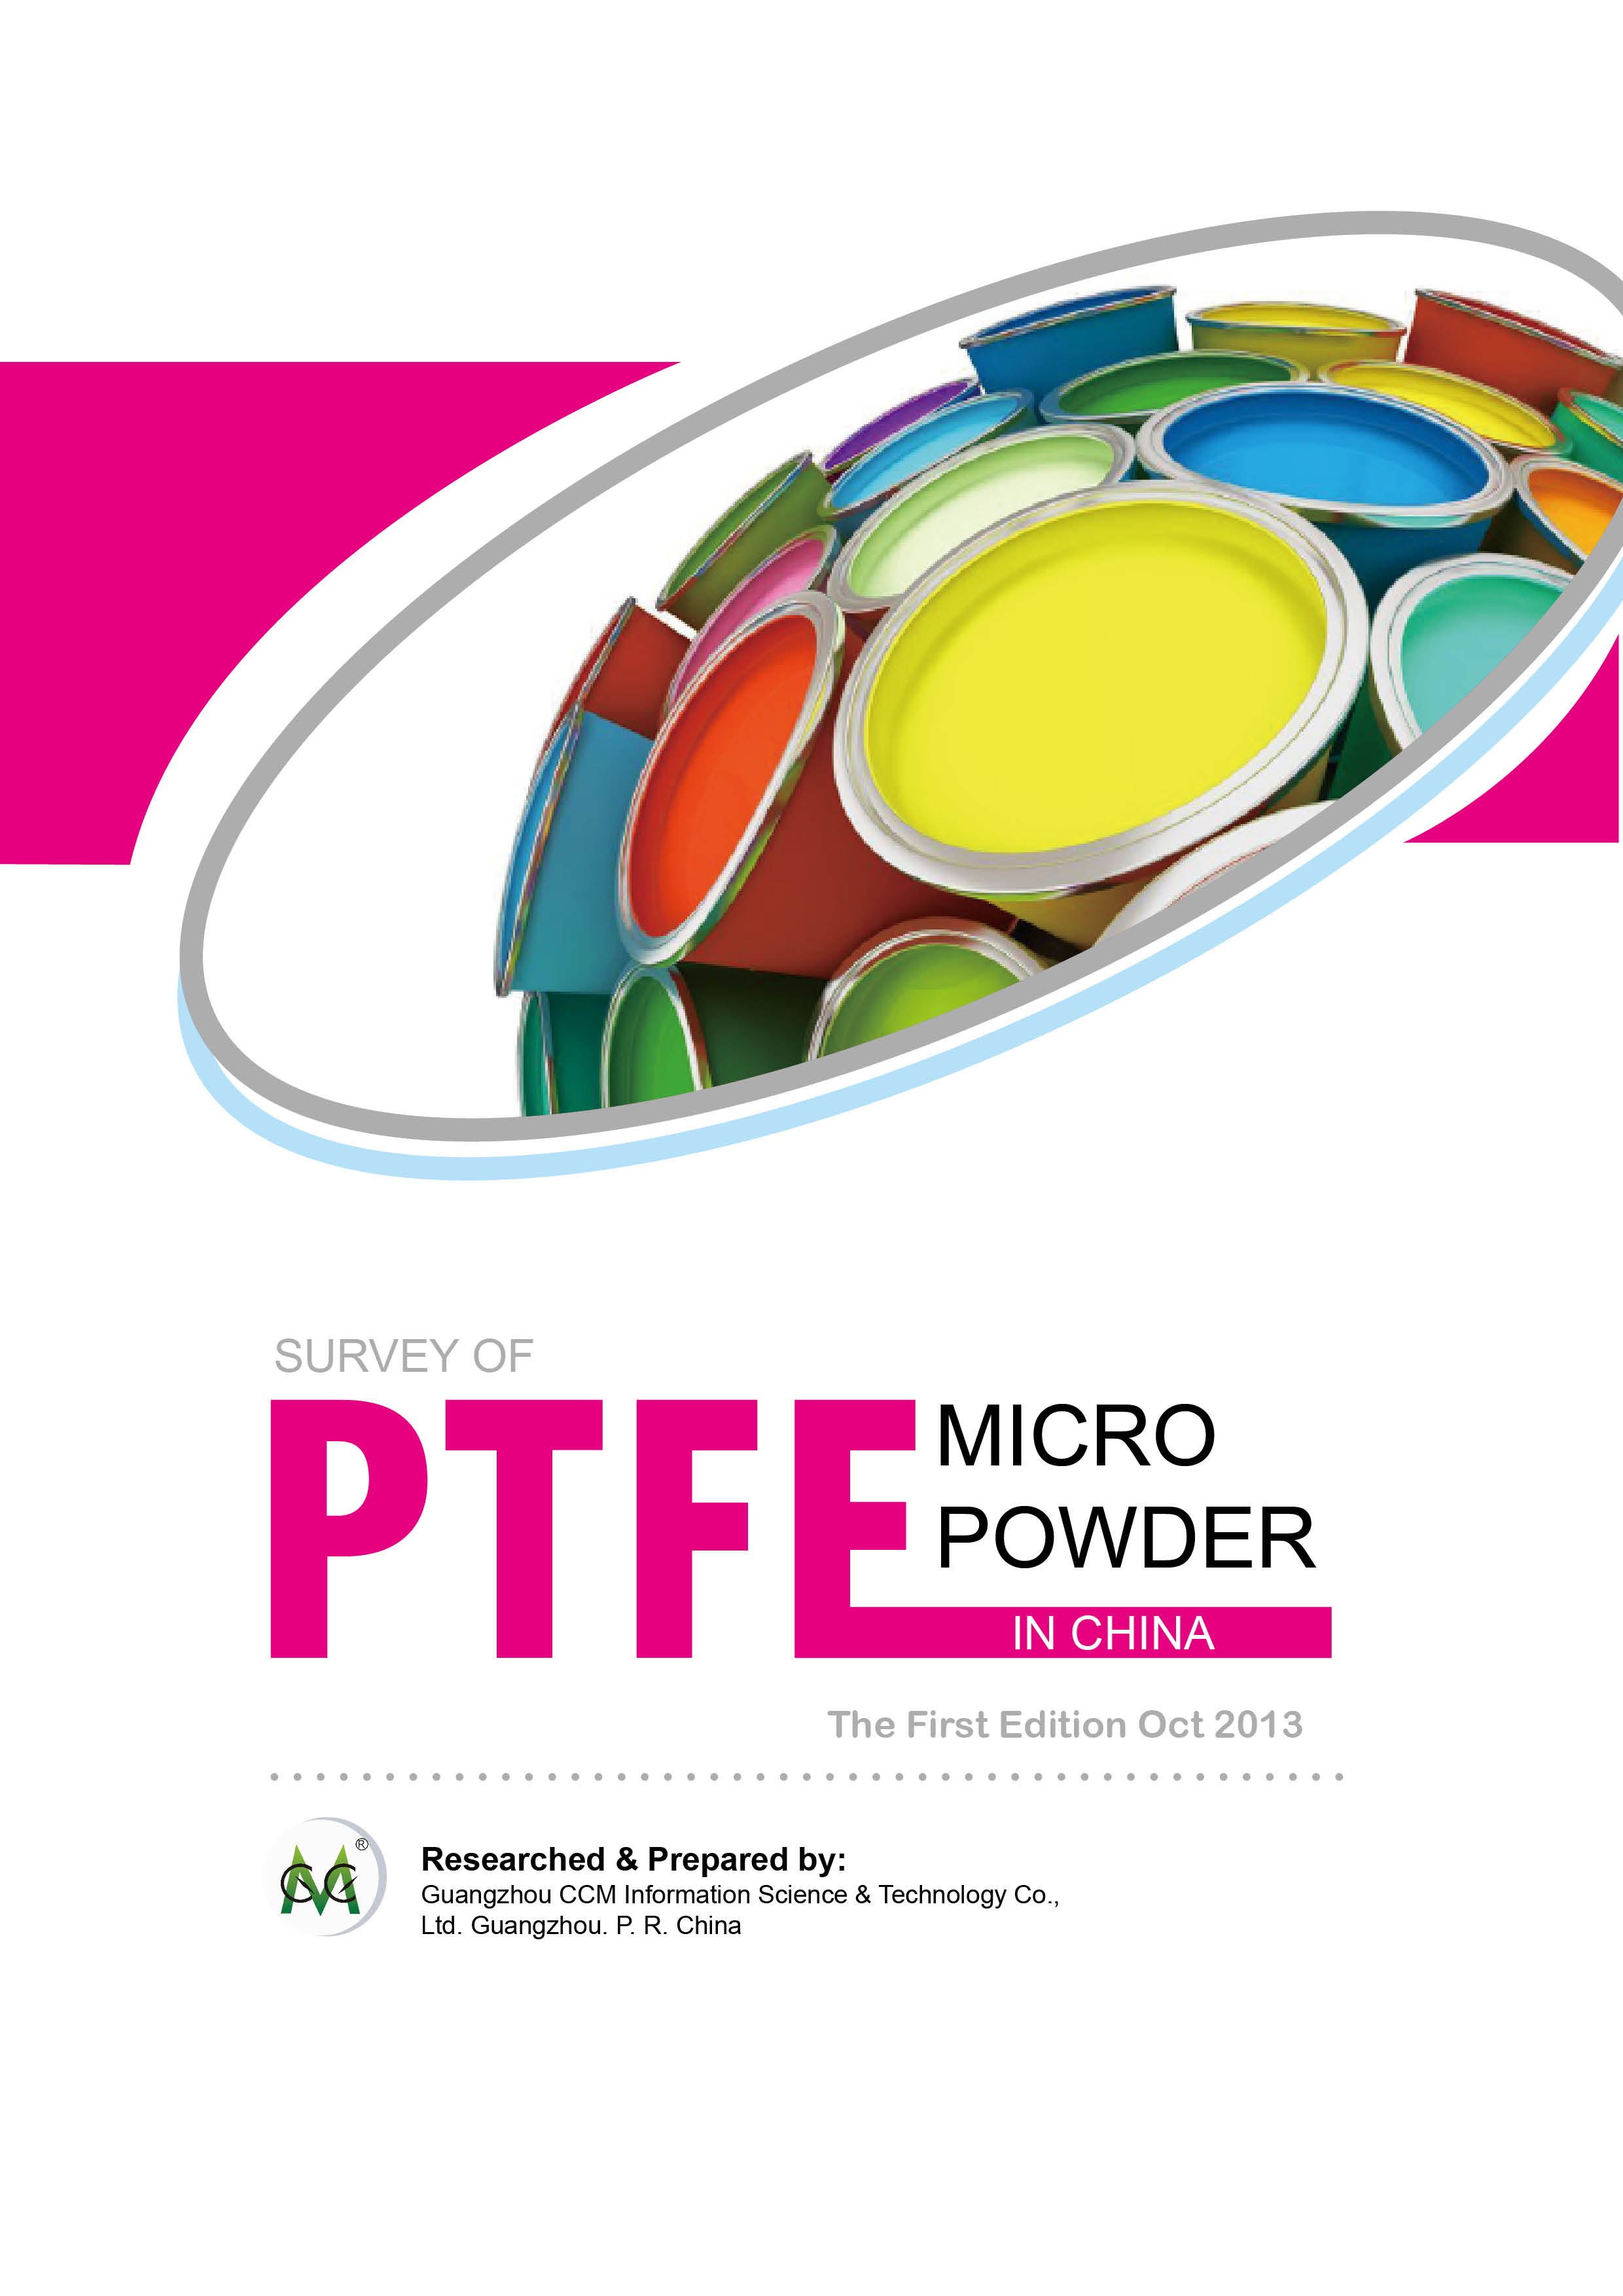 Survey of PTFE Micro Powder in China